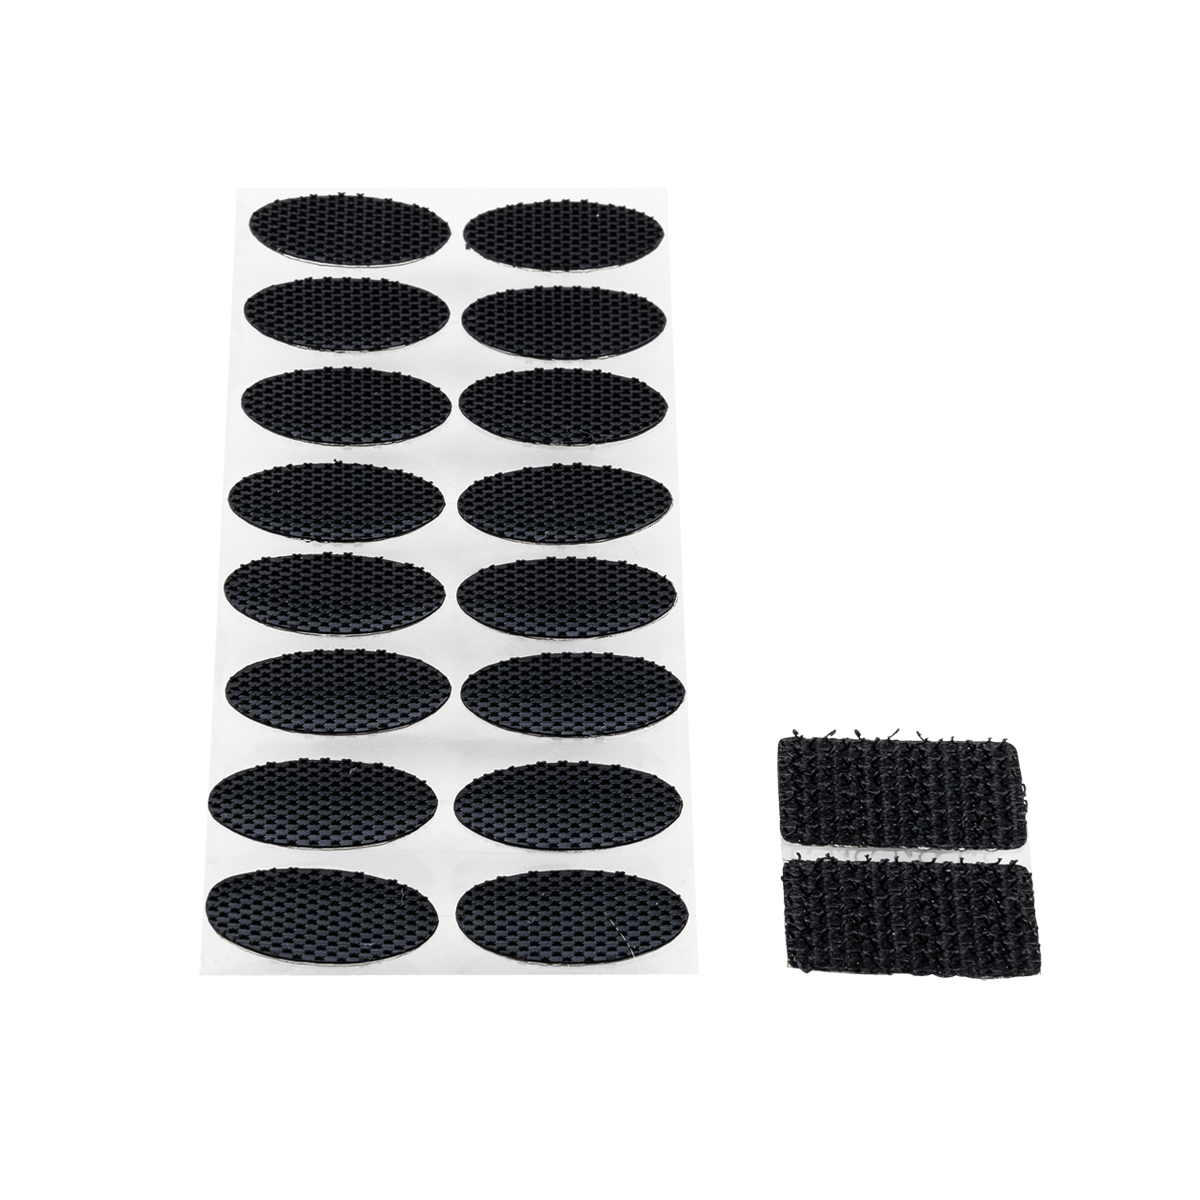  Black Velcro Dots